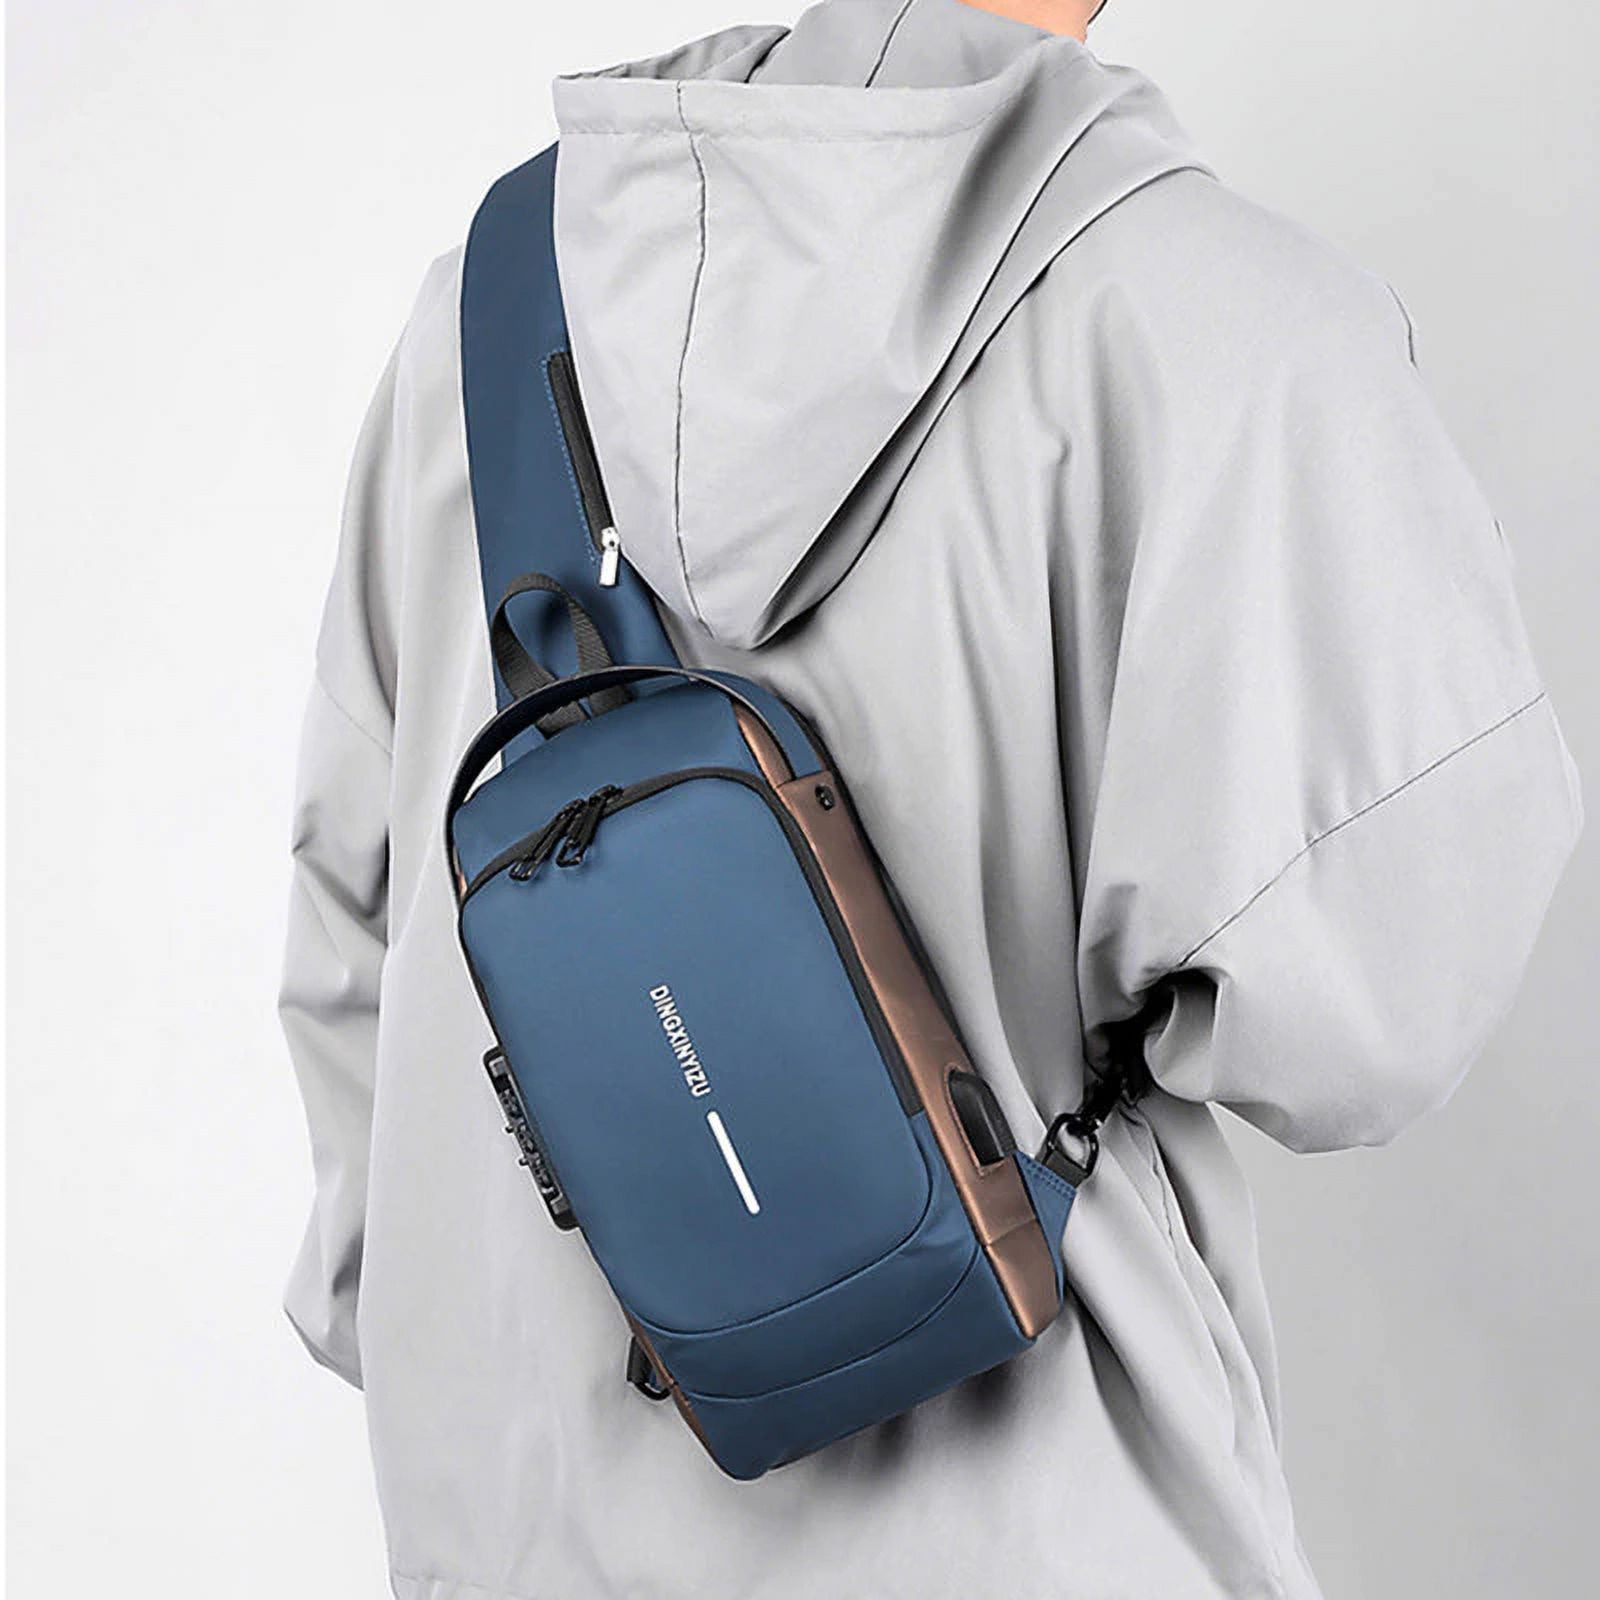 yievot Men And Women's Chest Bag Messenger Bag Fashion Waterproof